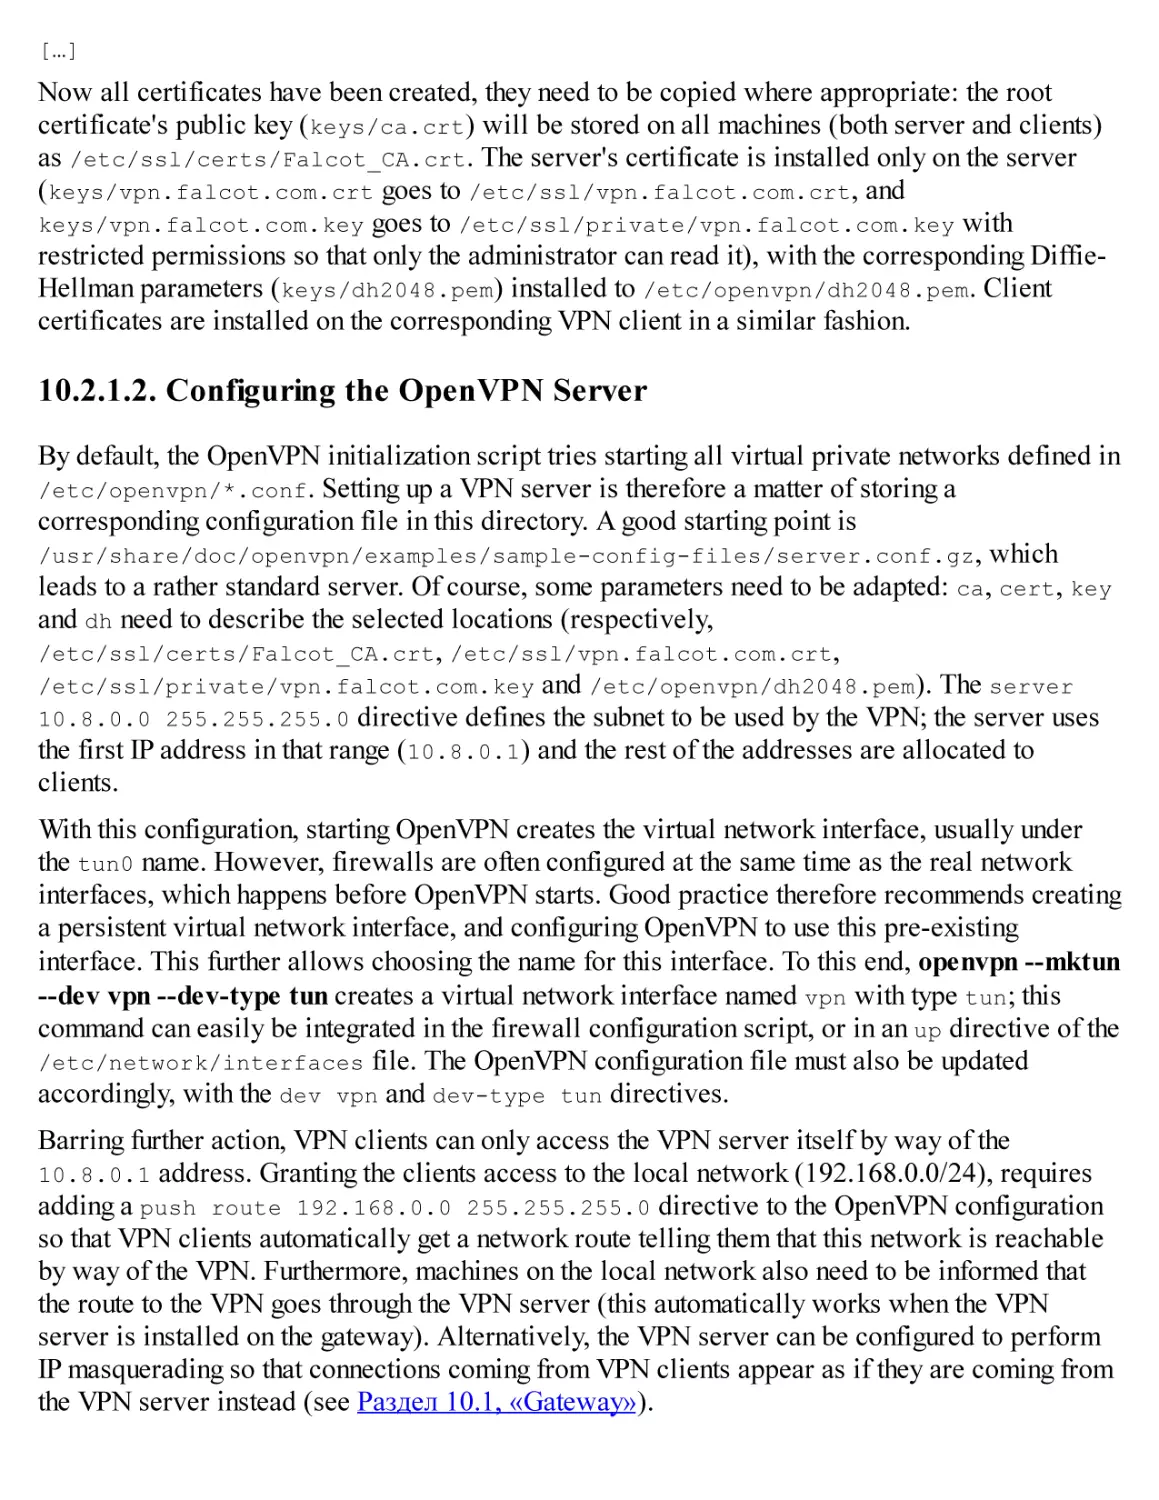 10.2.1.2. Configuring the OpenVPN Server